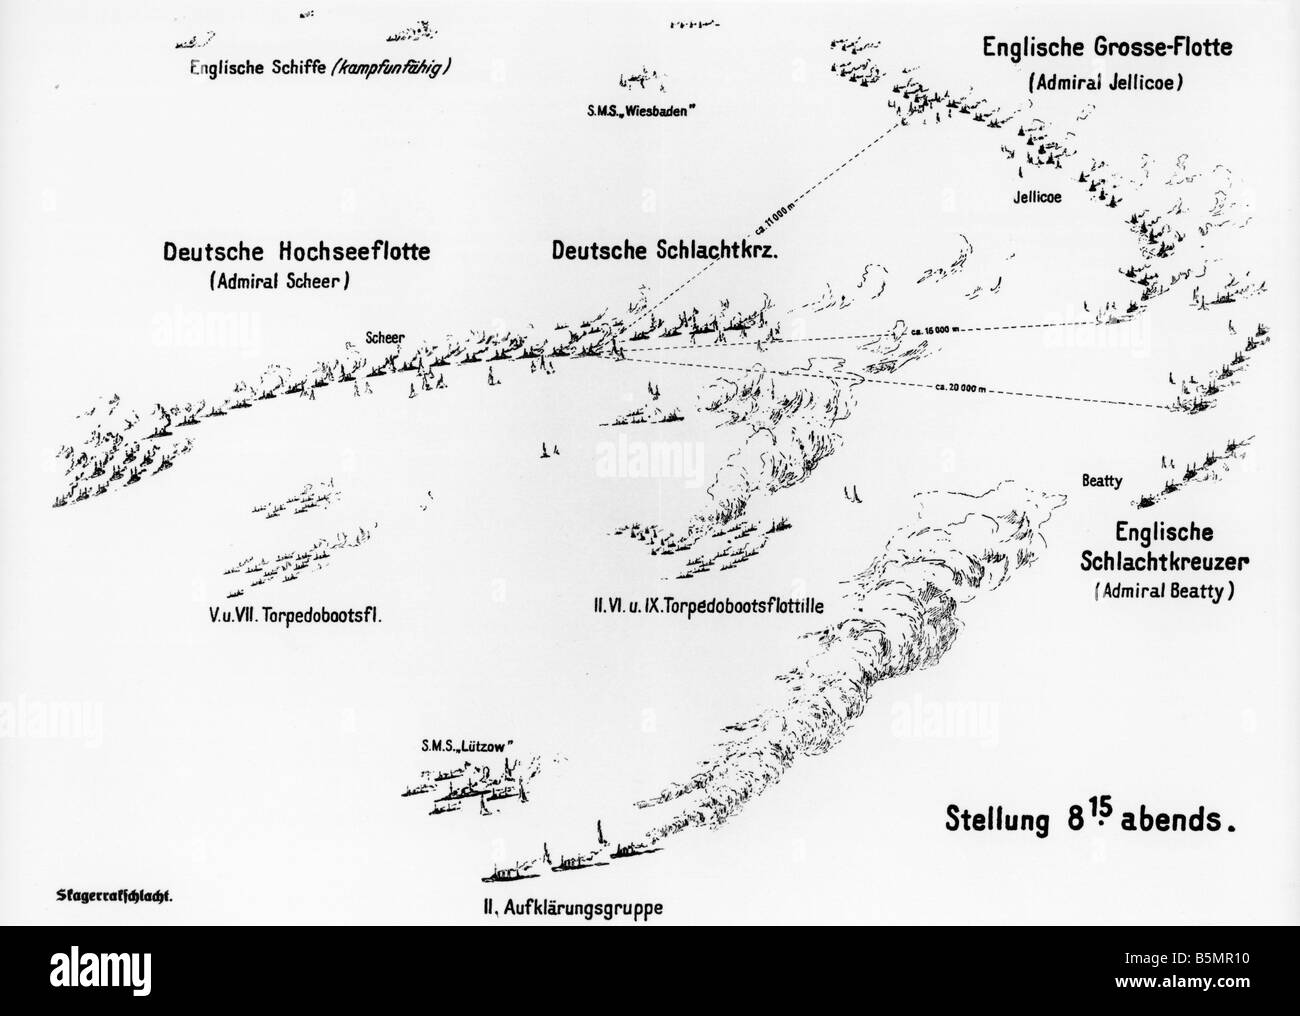 9 1916 5 31 F1 1 Sketch of Battle of Jutland 1916 World War 1 1914 18 Naval battle of Jutland Skagerrak 31 5 1 6 1916 Sketch of Stock Photo